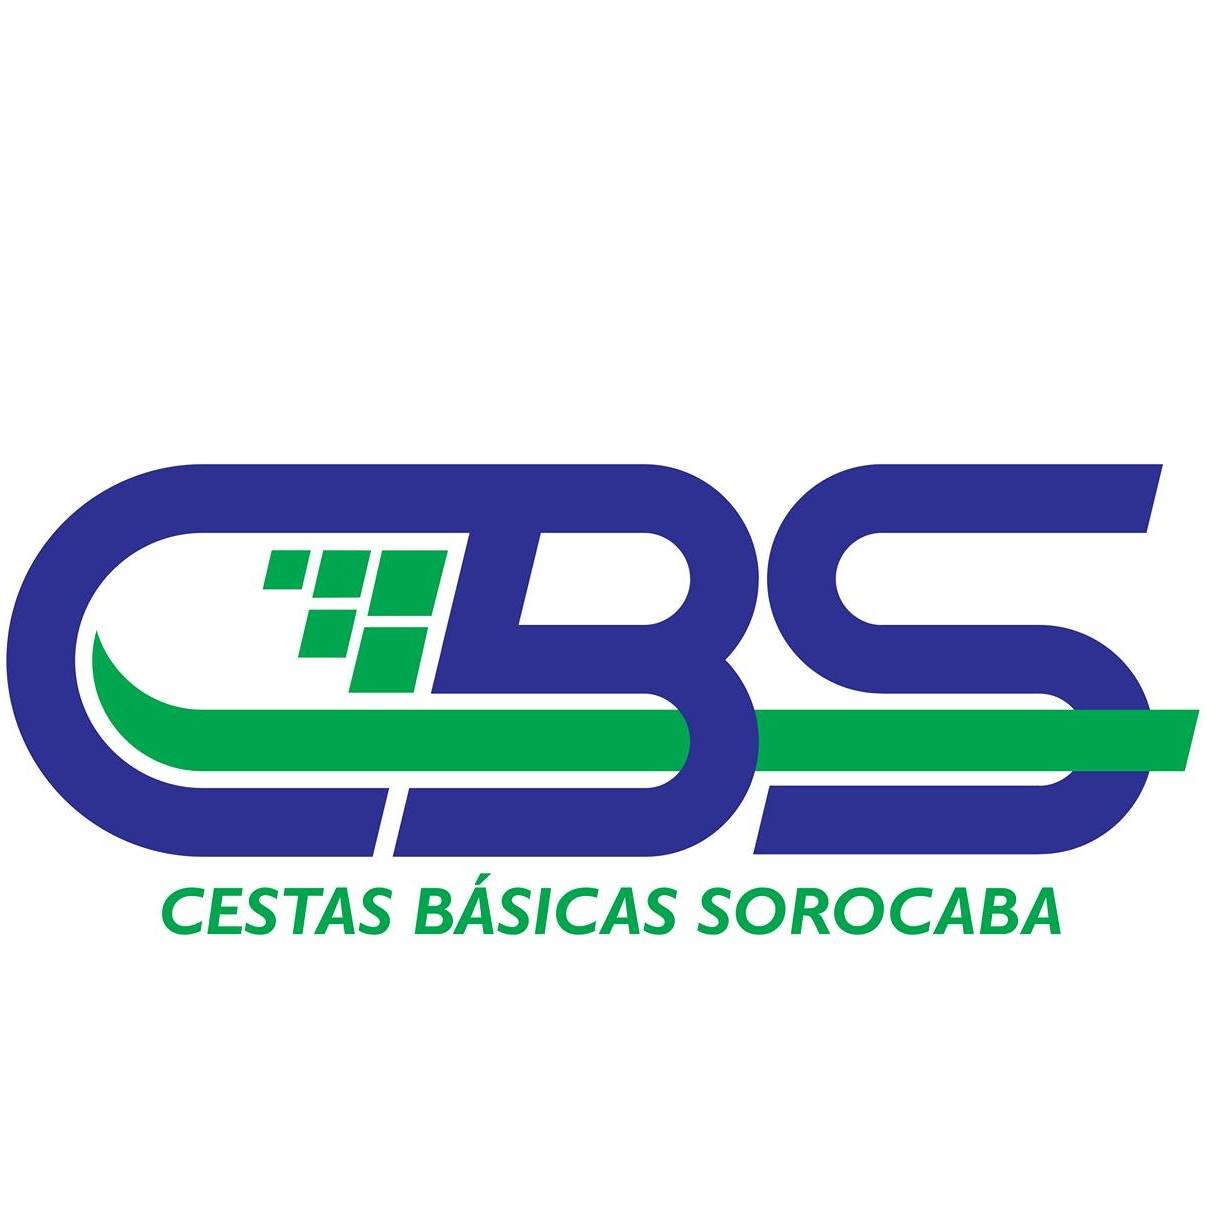 CBS CESTAS